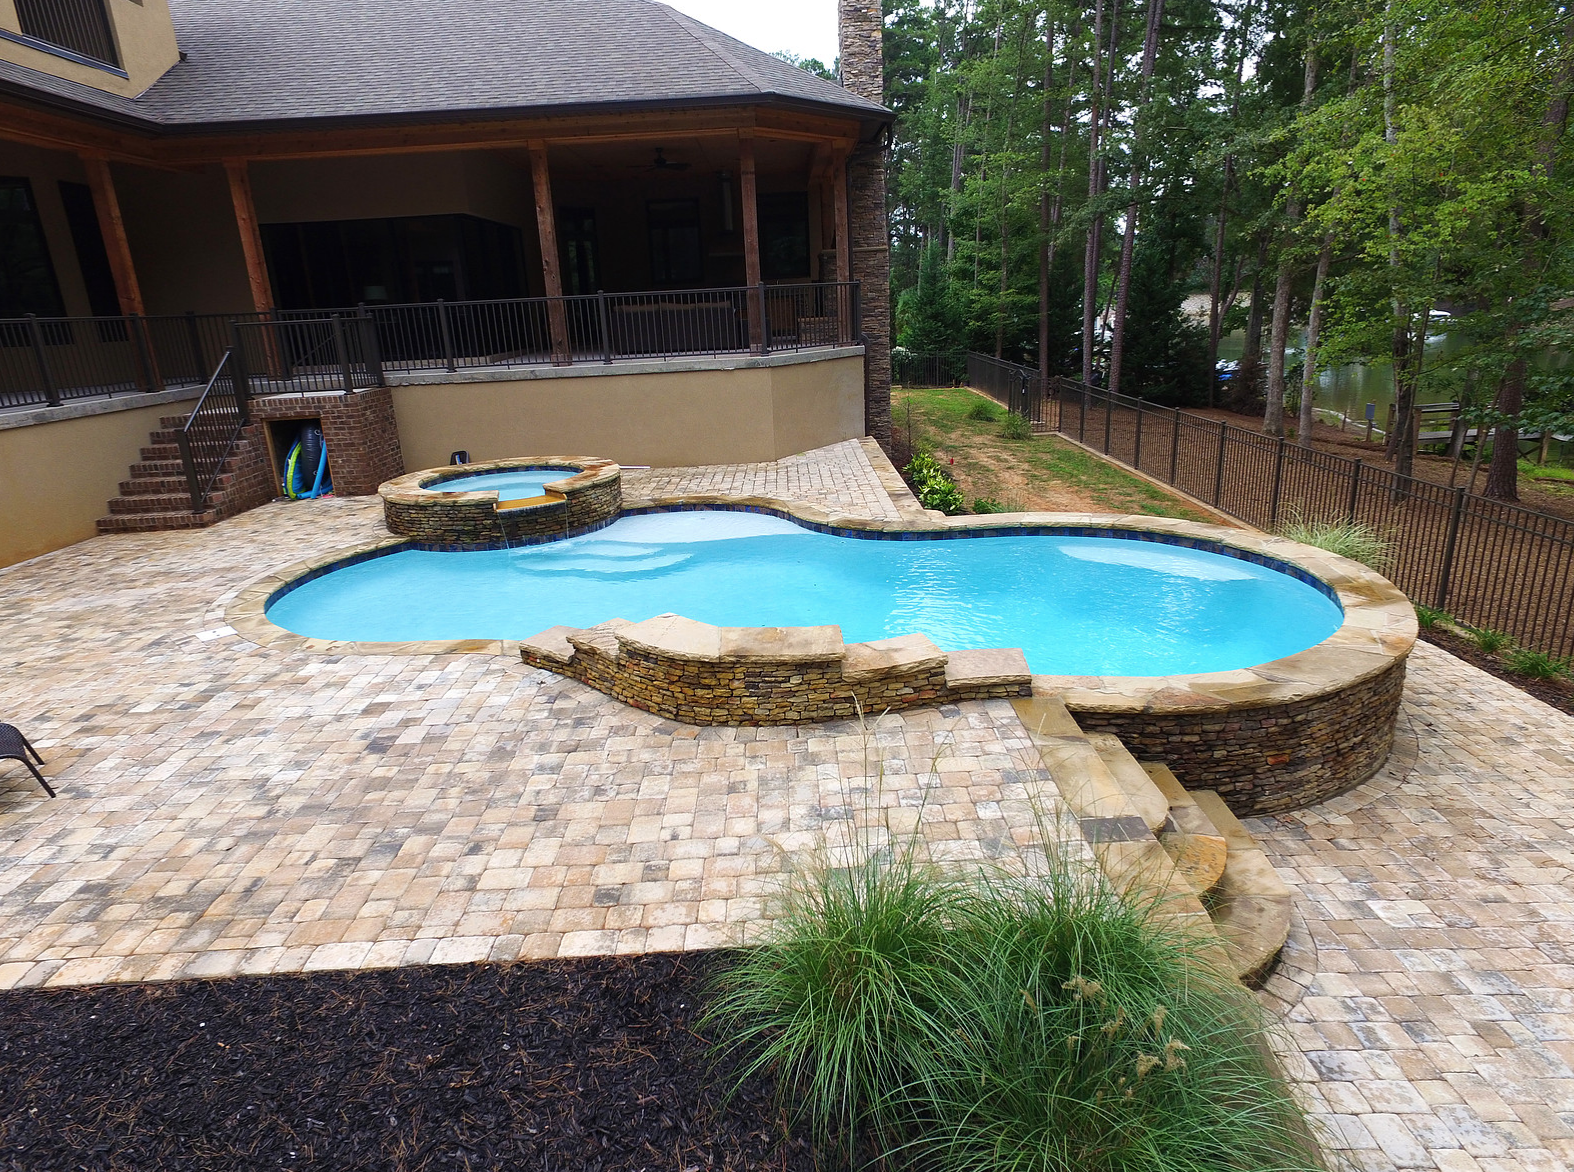 Build Custom Concrete Swimming Pools in Gastonia North Carolin with CPC Pools Call 704-799-5236